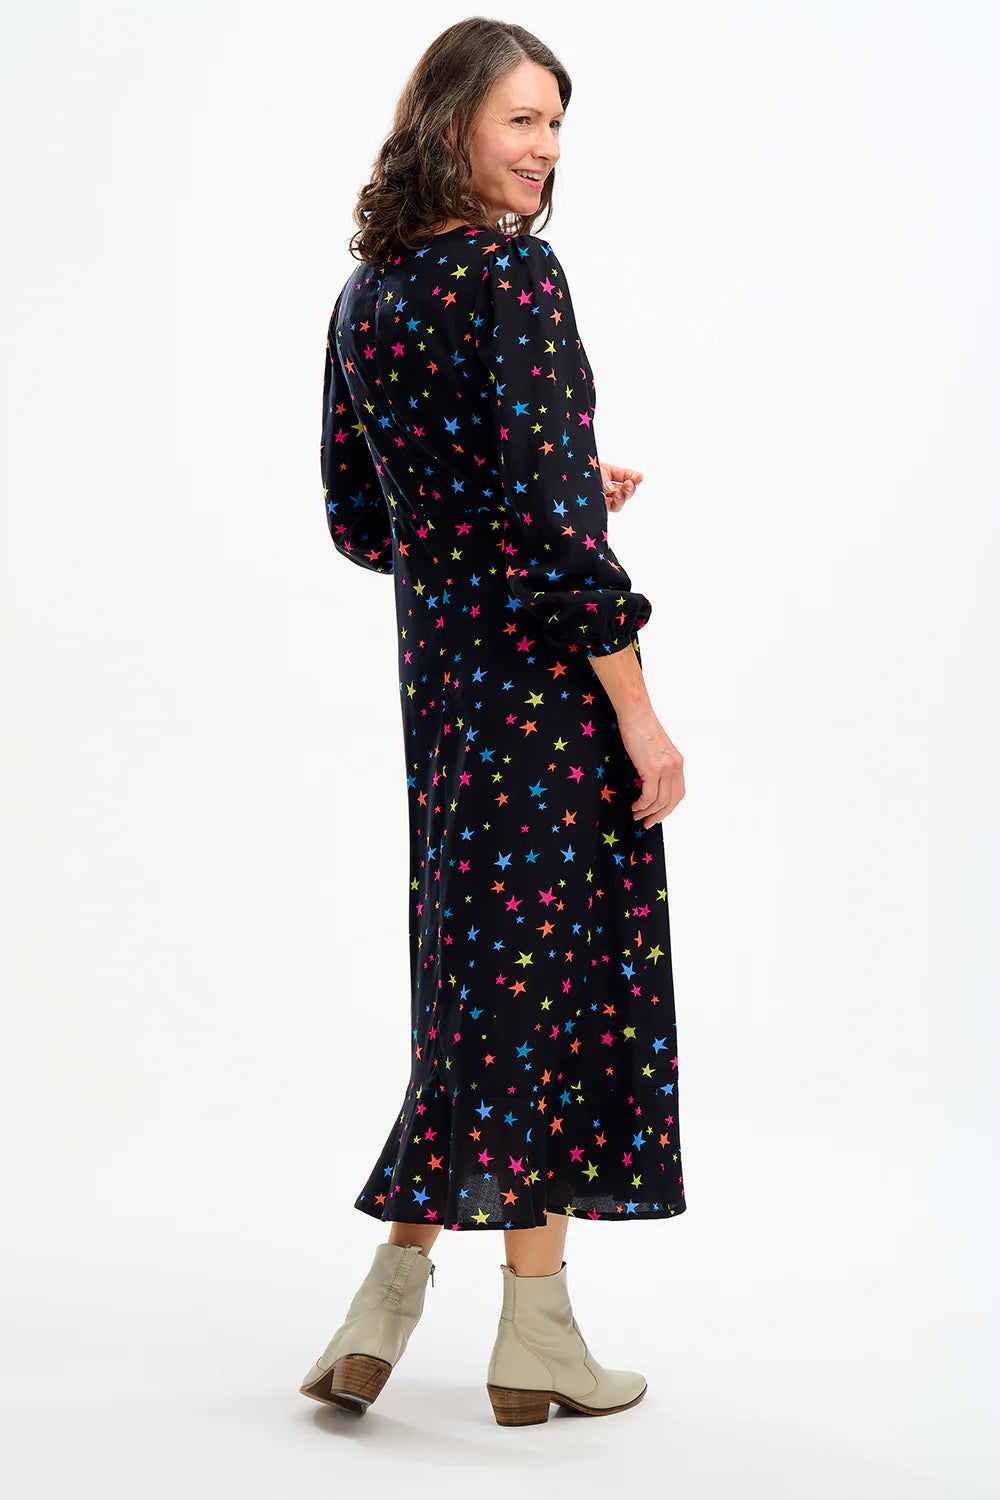 SUGARHILL BRIGHTON-Bliss Midi Dress - Black, Rainbow Star Confetti